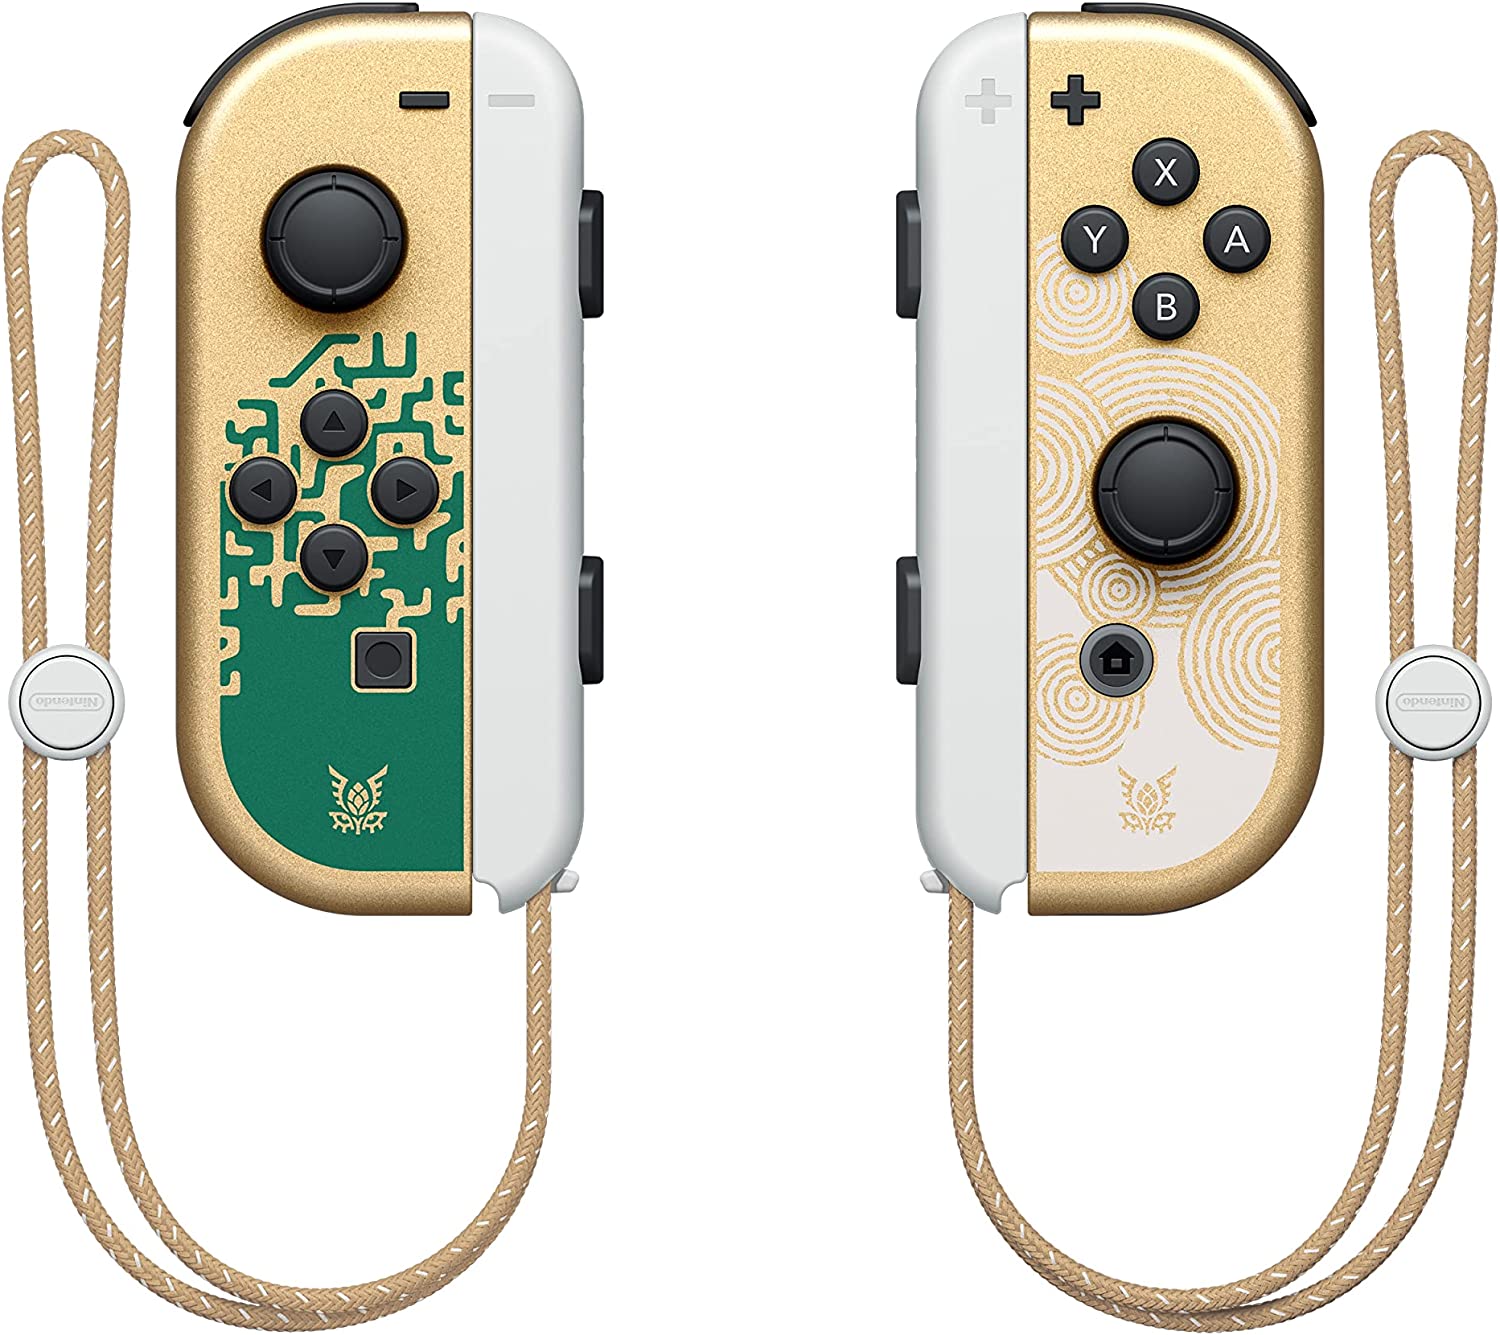 Nintendo Switch OLED Model Console - Legend of Zelda: Tears of the Kingdom Edition